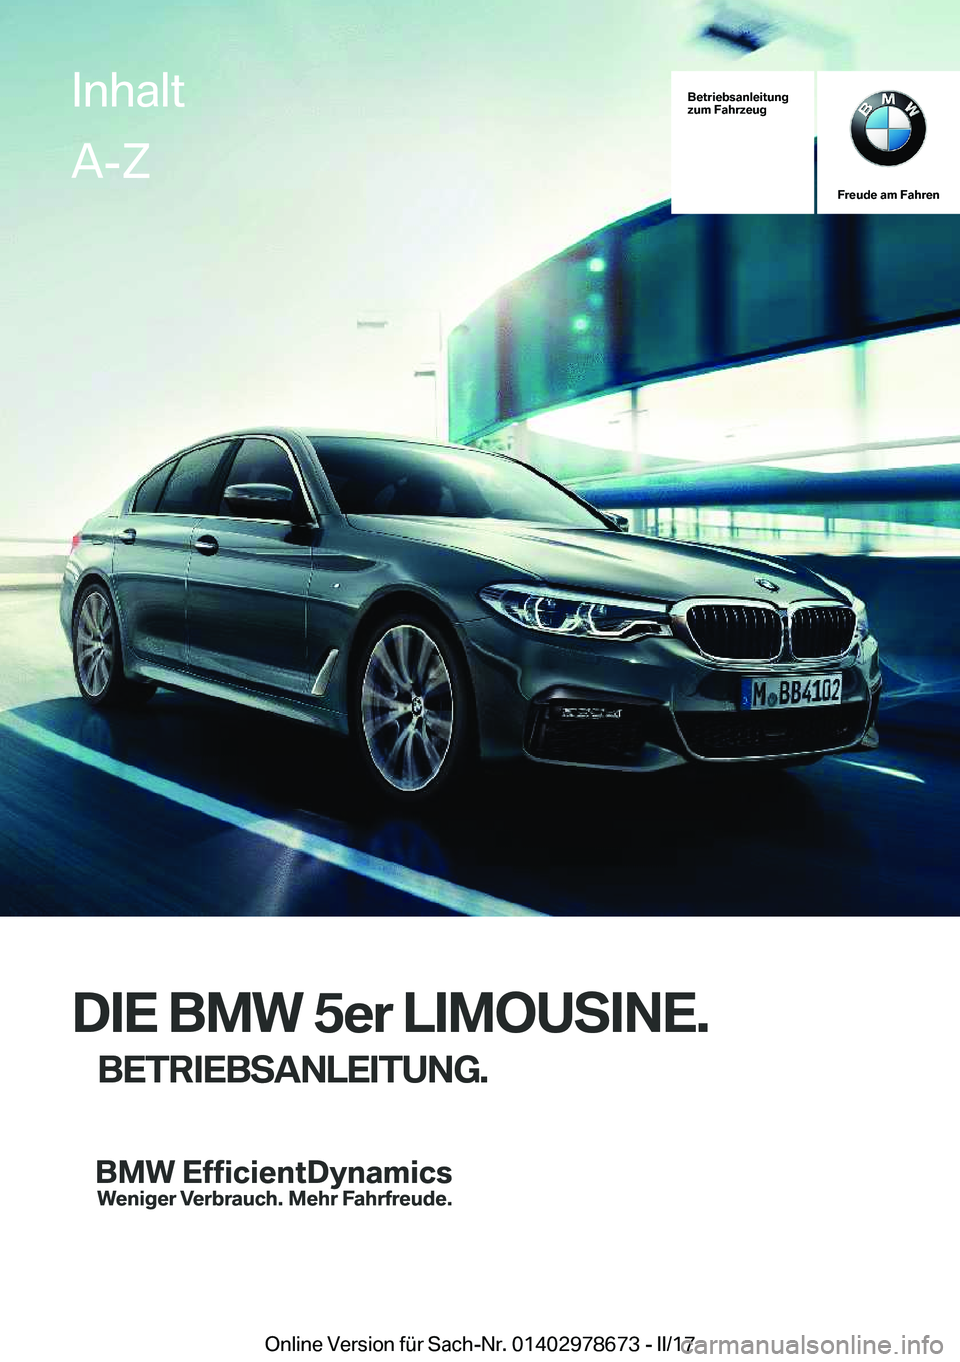 BMW 5 SERIES 2017  Betriebsanleitungen (in German) �B�e�t�r�i�e�b�s�a�n�l�e�i�t�u�n�g
�z�u�m��F�a�h�r�z�e�u�g
�F�r�e�u�d�e��a�m��F�a�h�r�e�n
�D�I�E��B�M�W��5�e�r��L�I�M�O�U�S�I�N�E�.
�B�E�T�R�I�E�B�S�A�N�L�E�I�T�U�N�G�.
�I�n�h�a�l�t�A�-�Z
�O�n�l